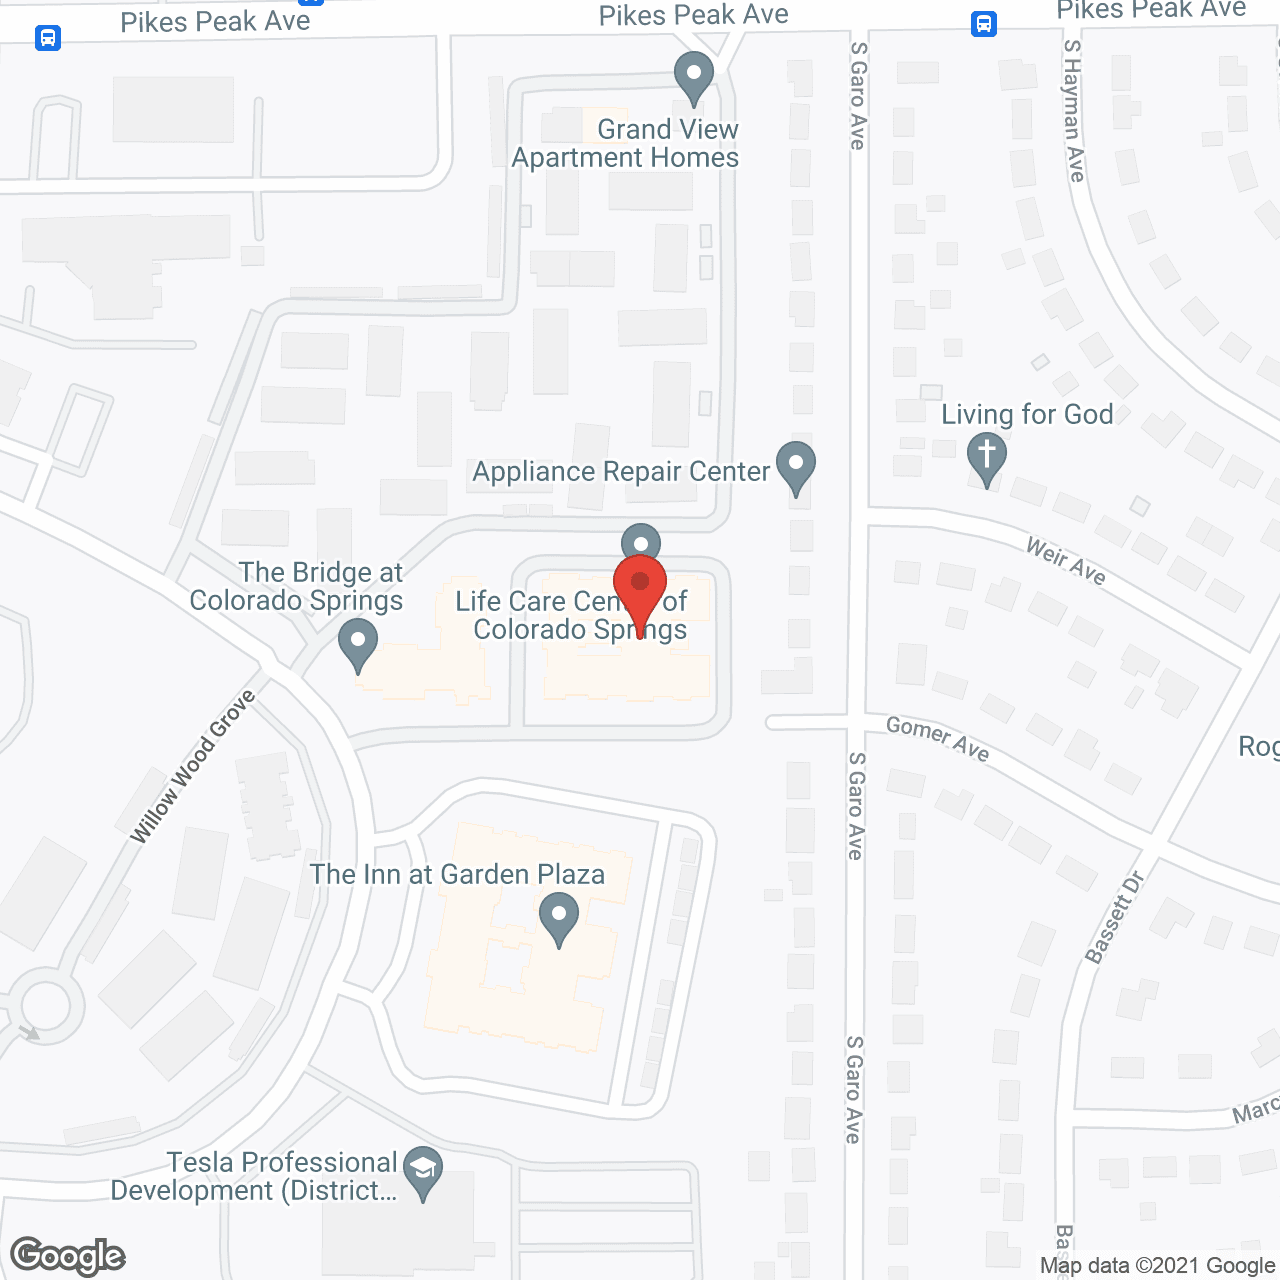 Life Care Center of Colorado Springs in google map